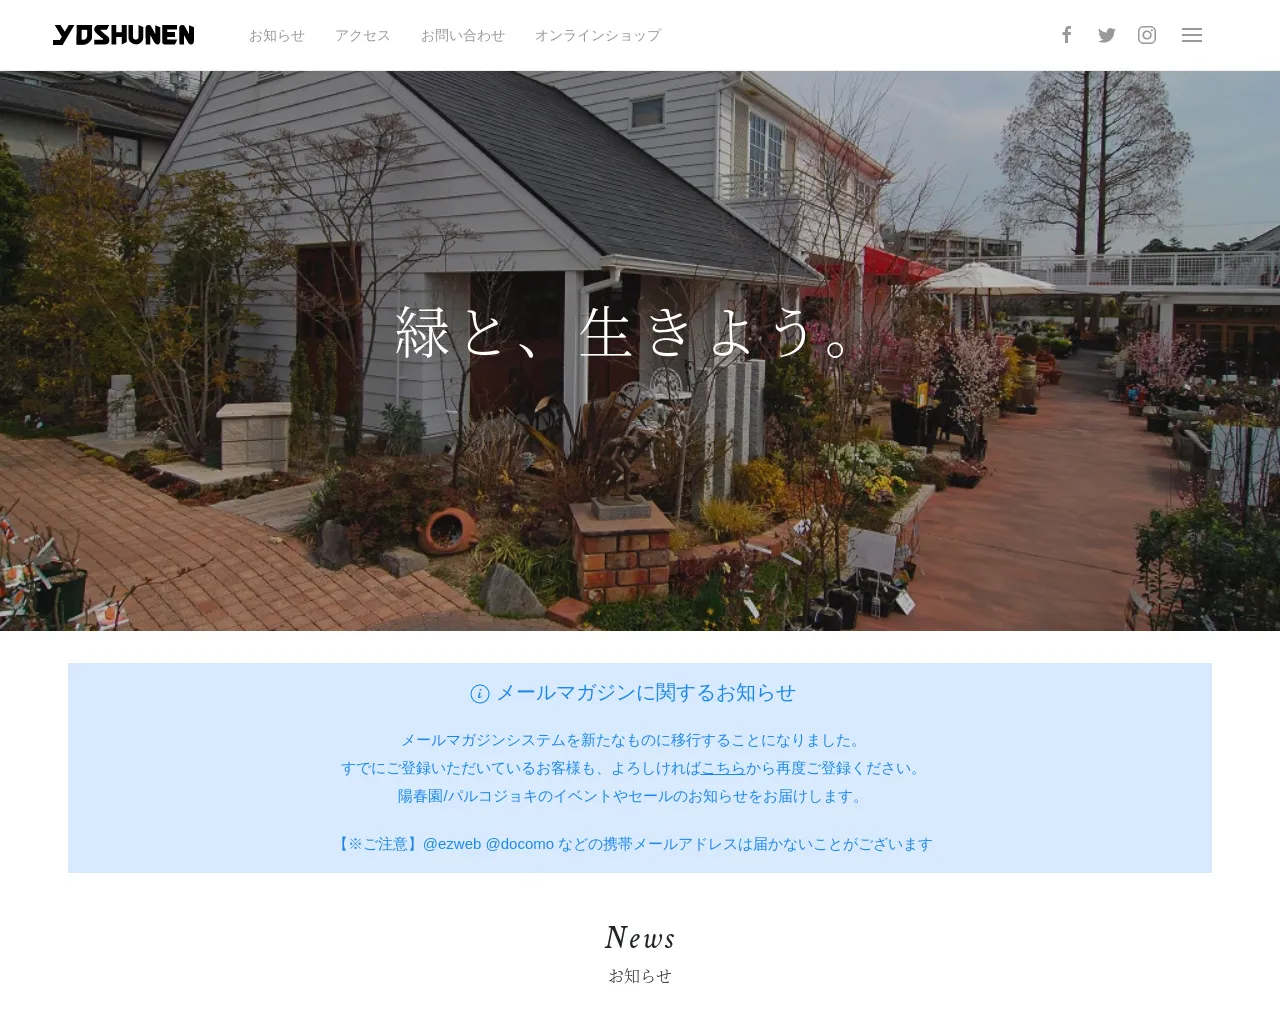 Yoshunen Co., Ltd. PARCOGIOCHI site